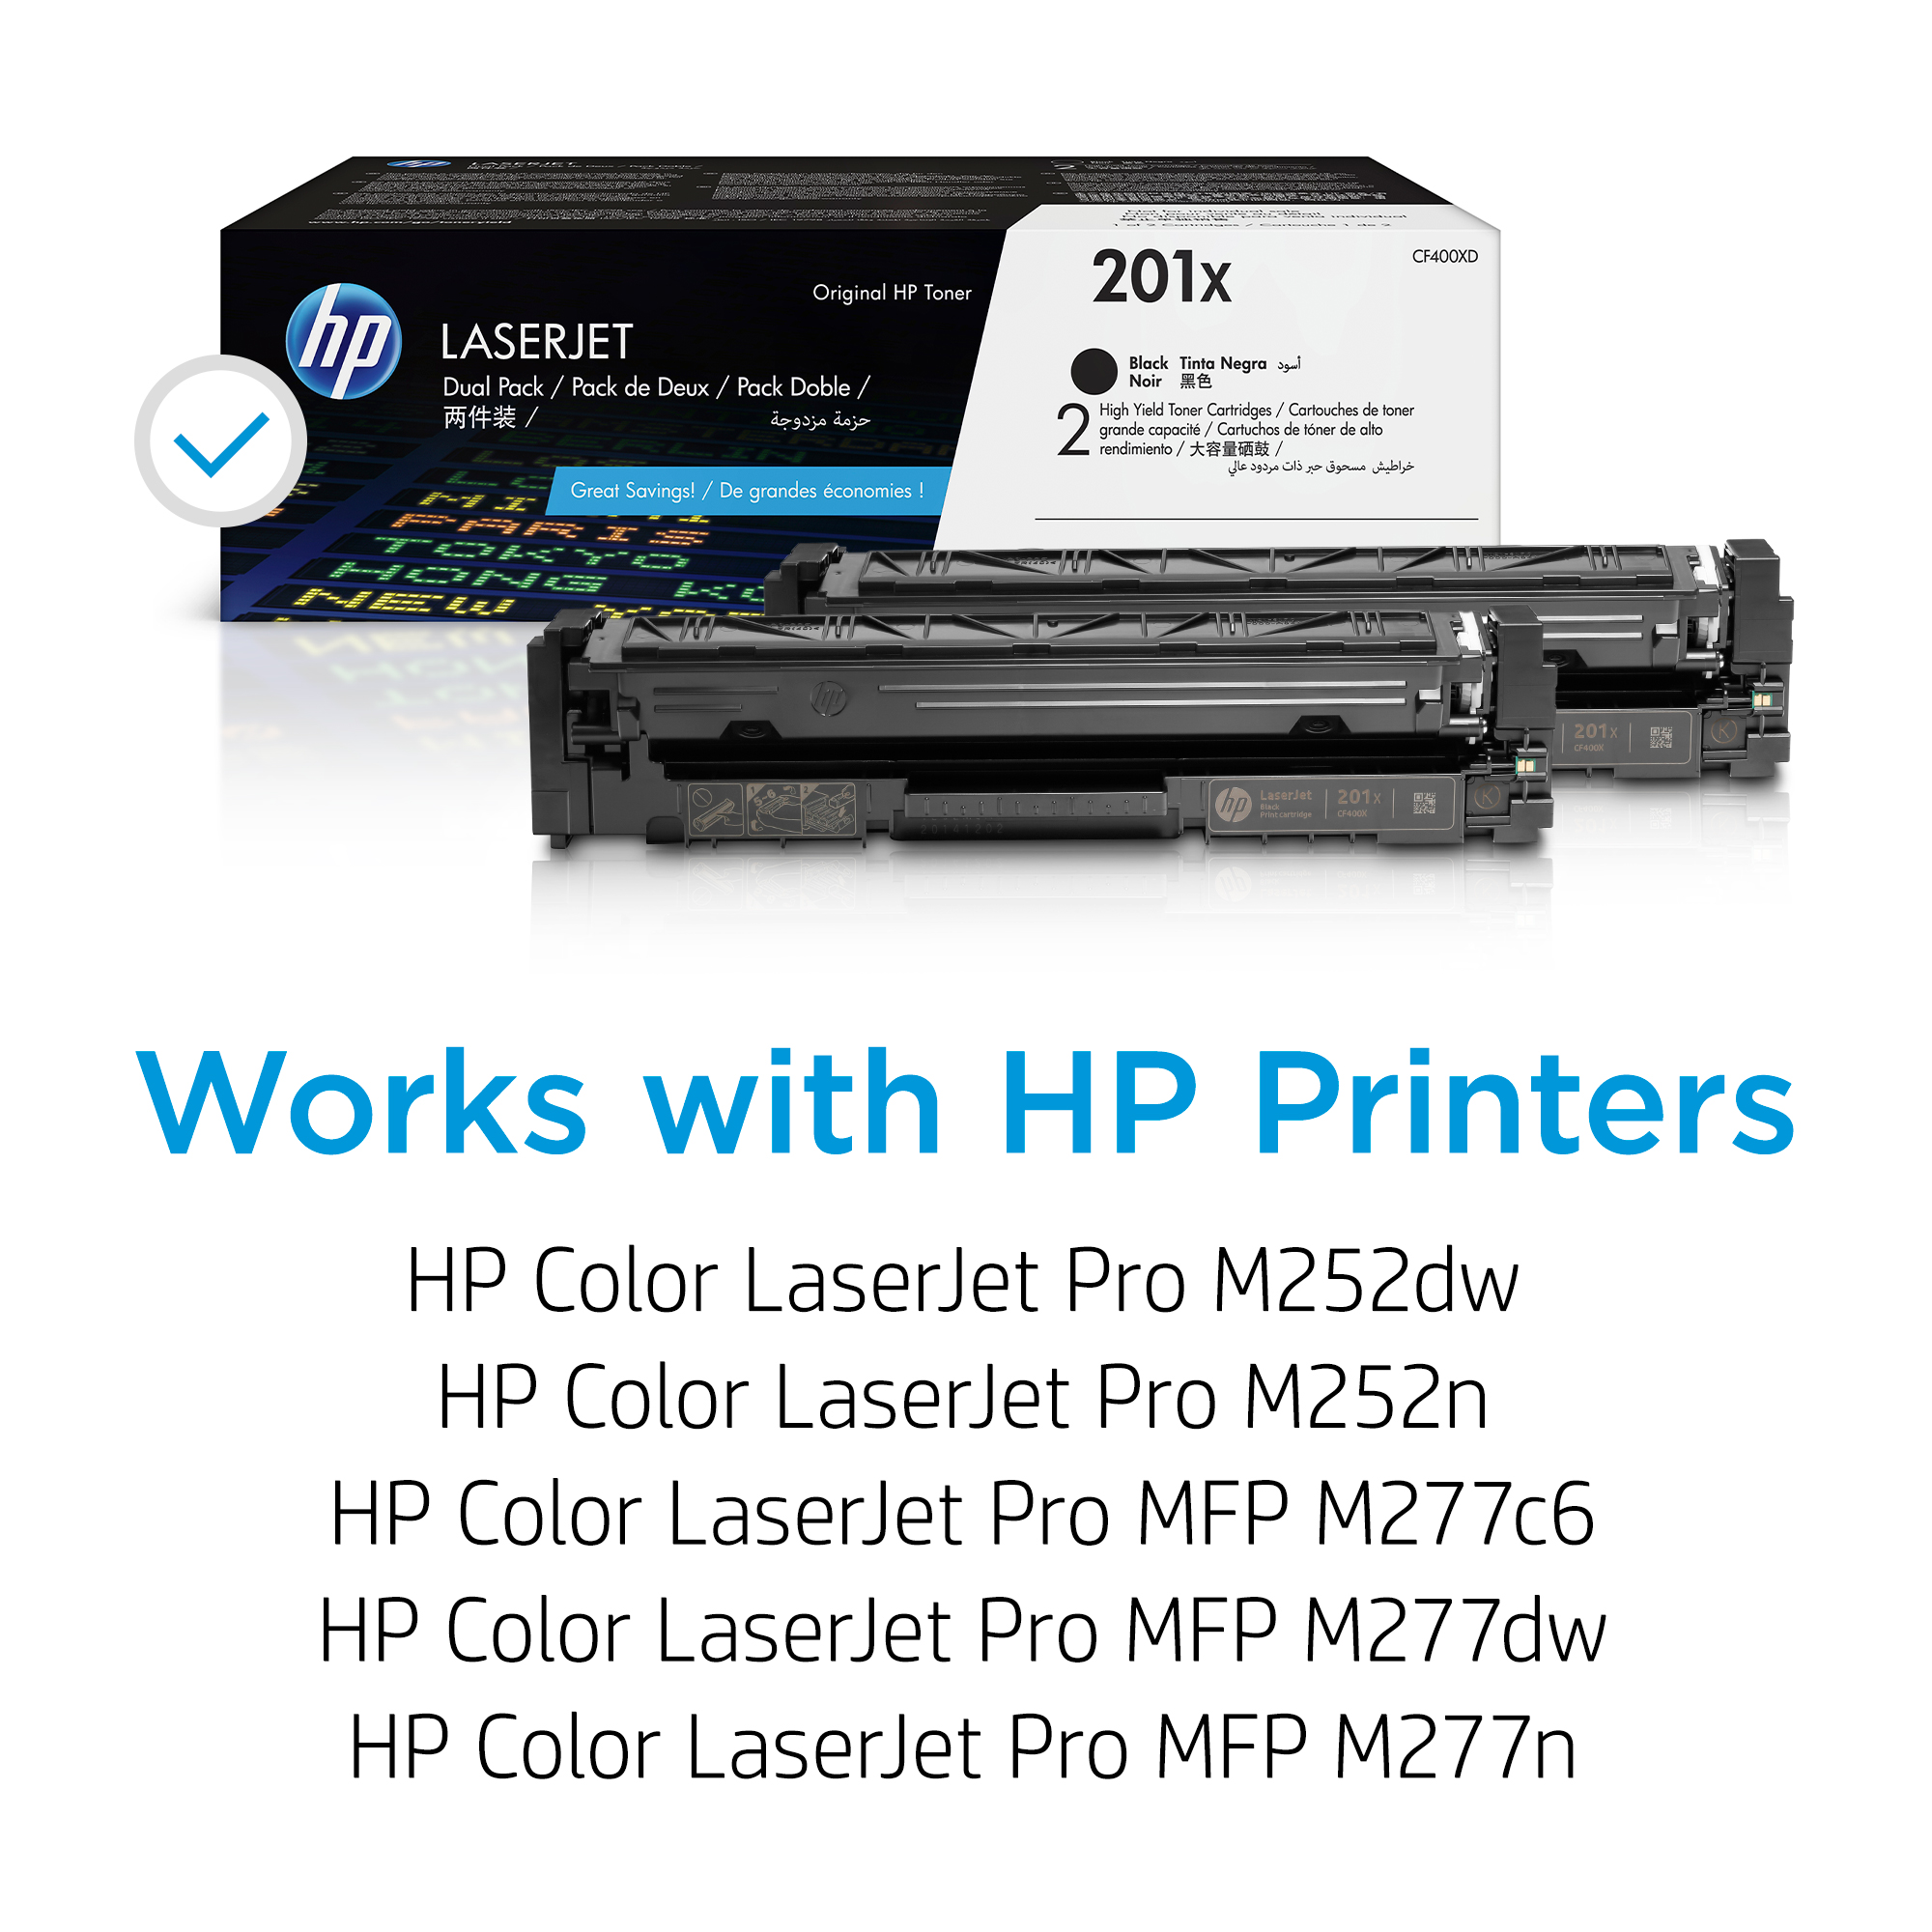 HP 201X (CF400XD) Toner Cartridges - Black High Yield (2 pack) - image 4 of 8